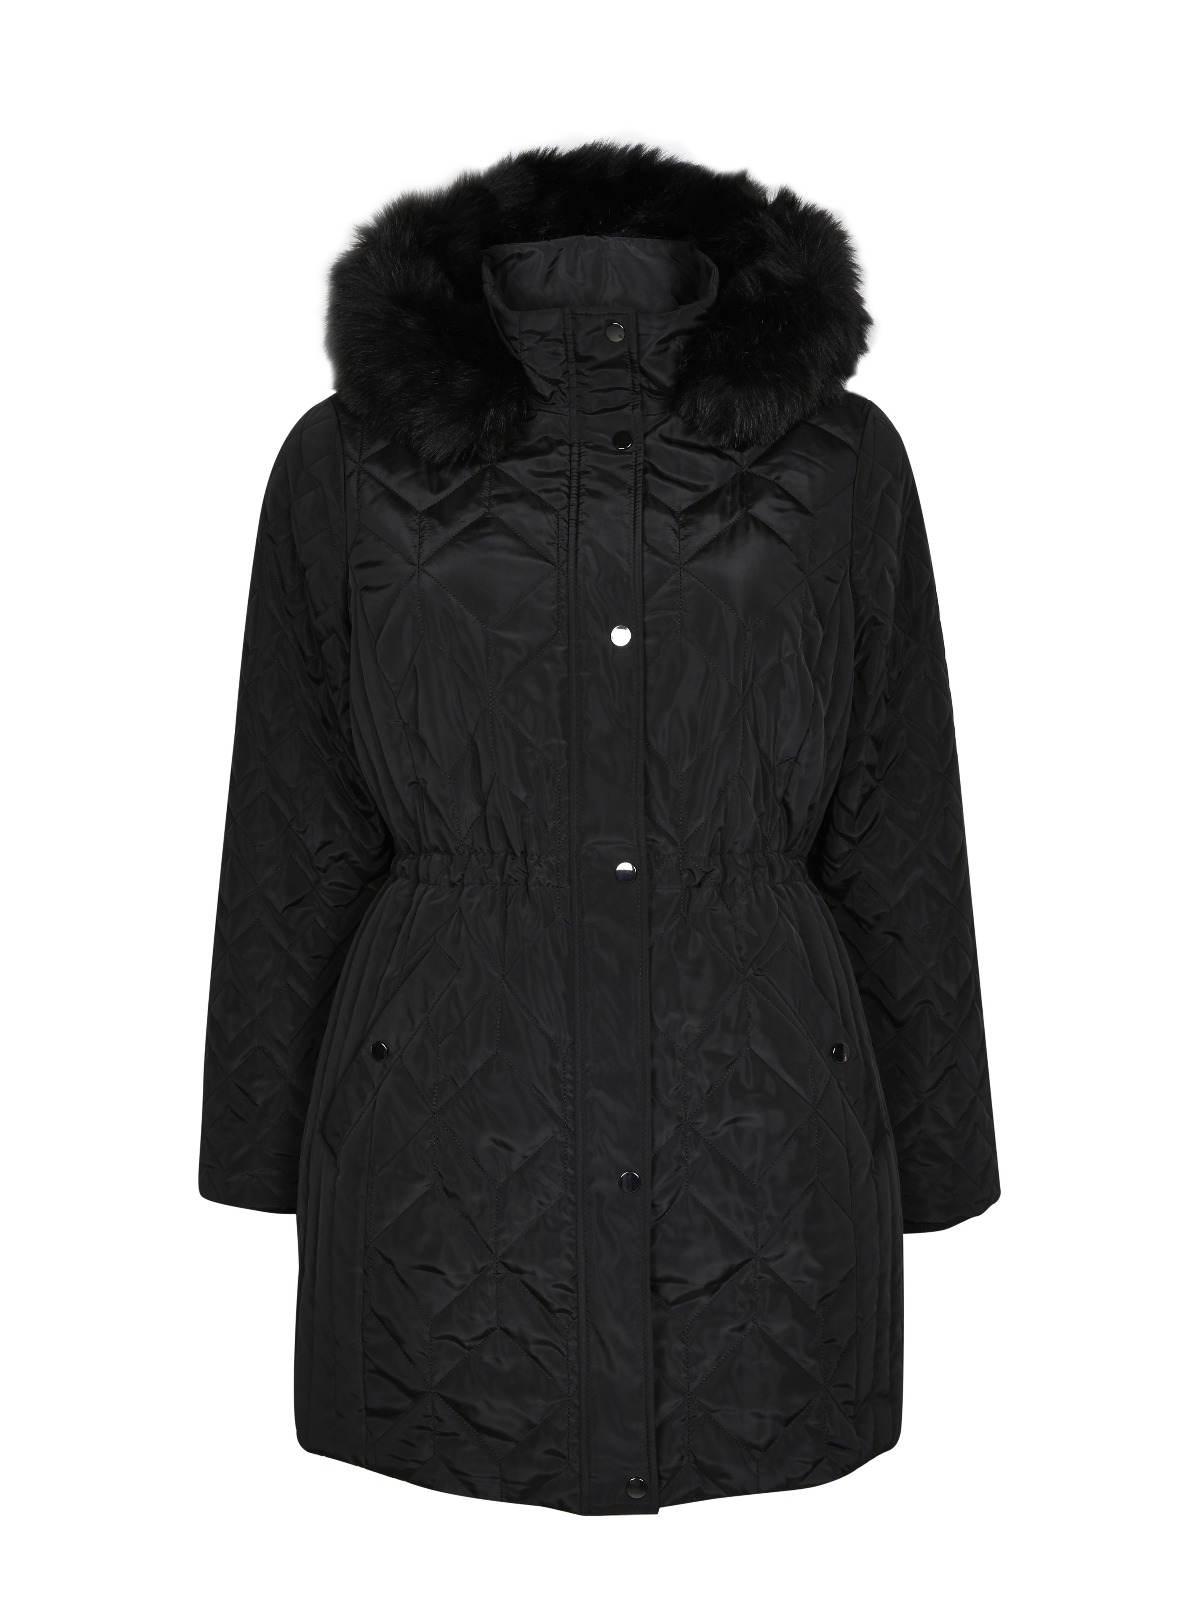 EX EVANS Ladies Womens Black Quilted Parka Coat Jacket Size 14 16 18 20 ...